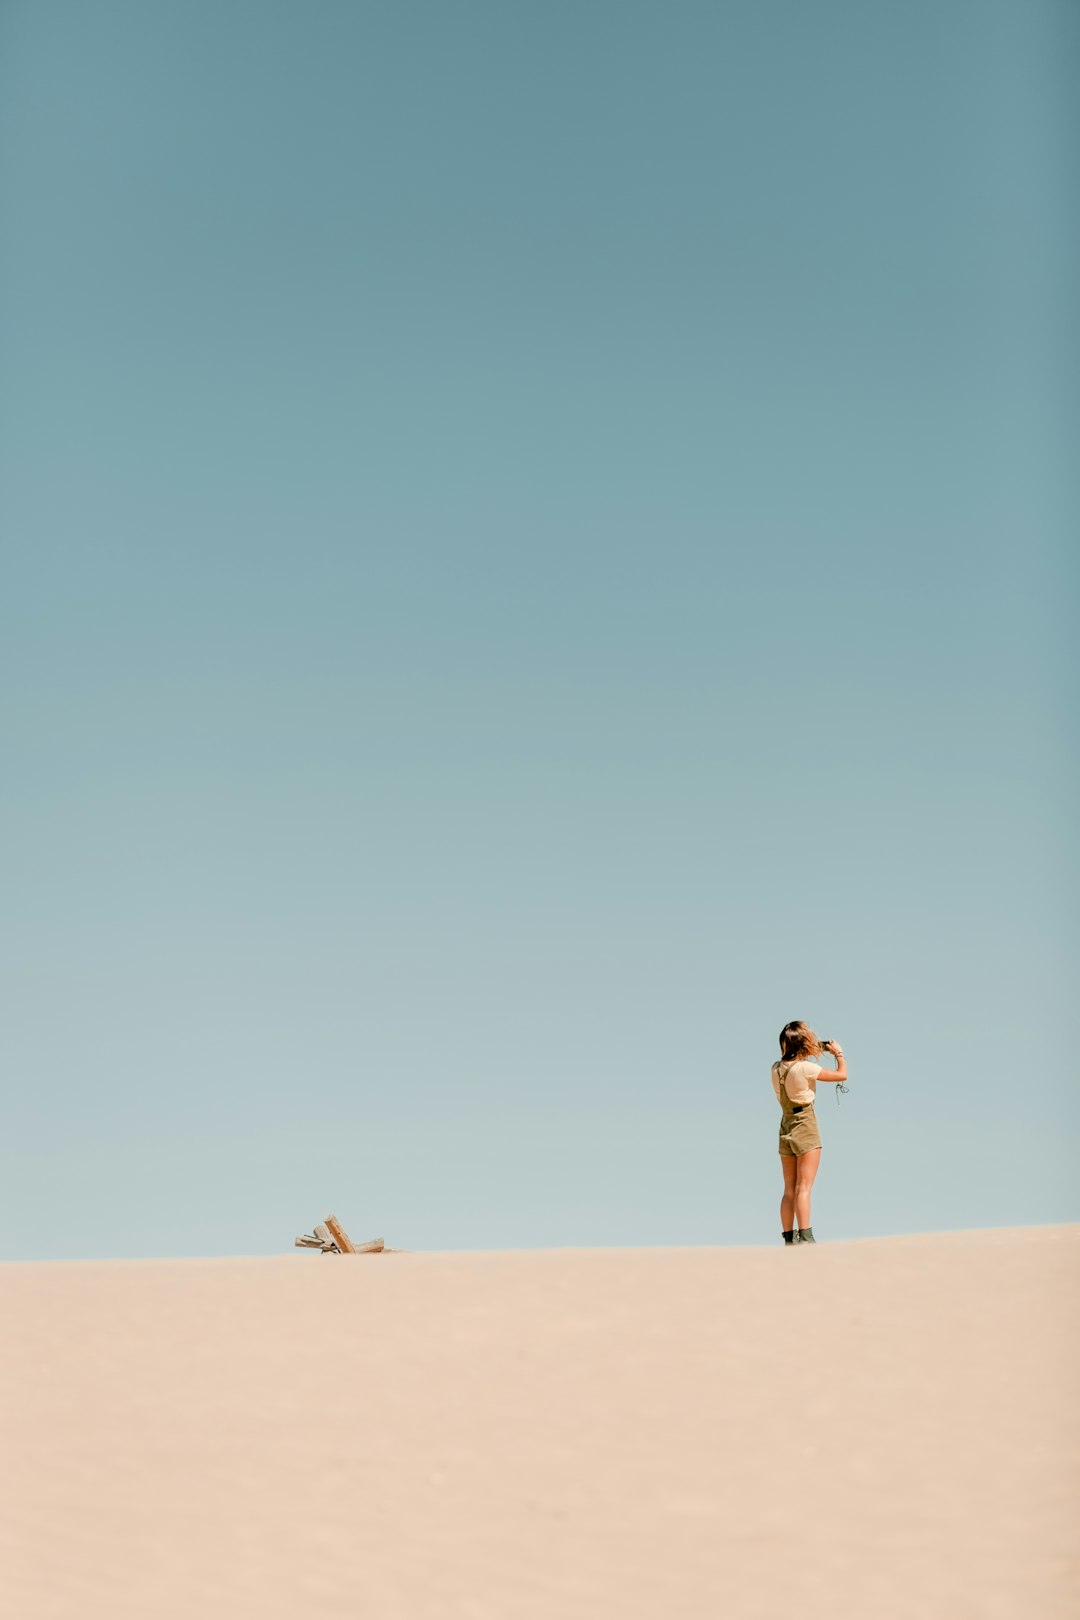 person wearing white t-shirt standing on desert during daytime